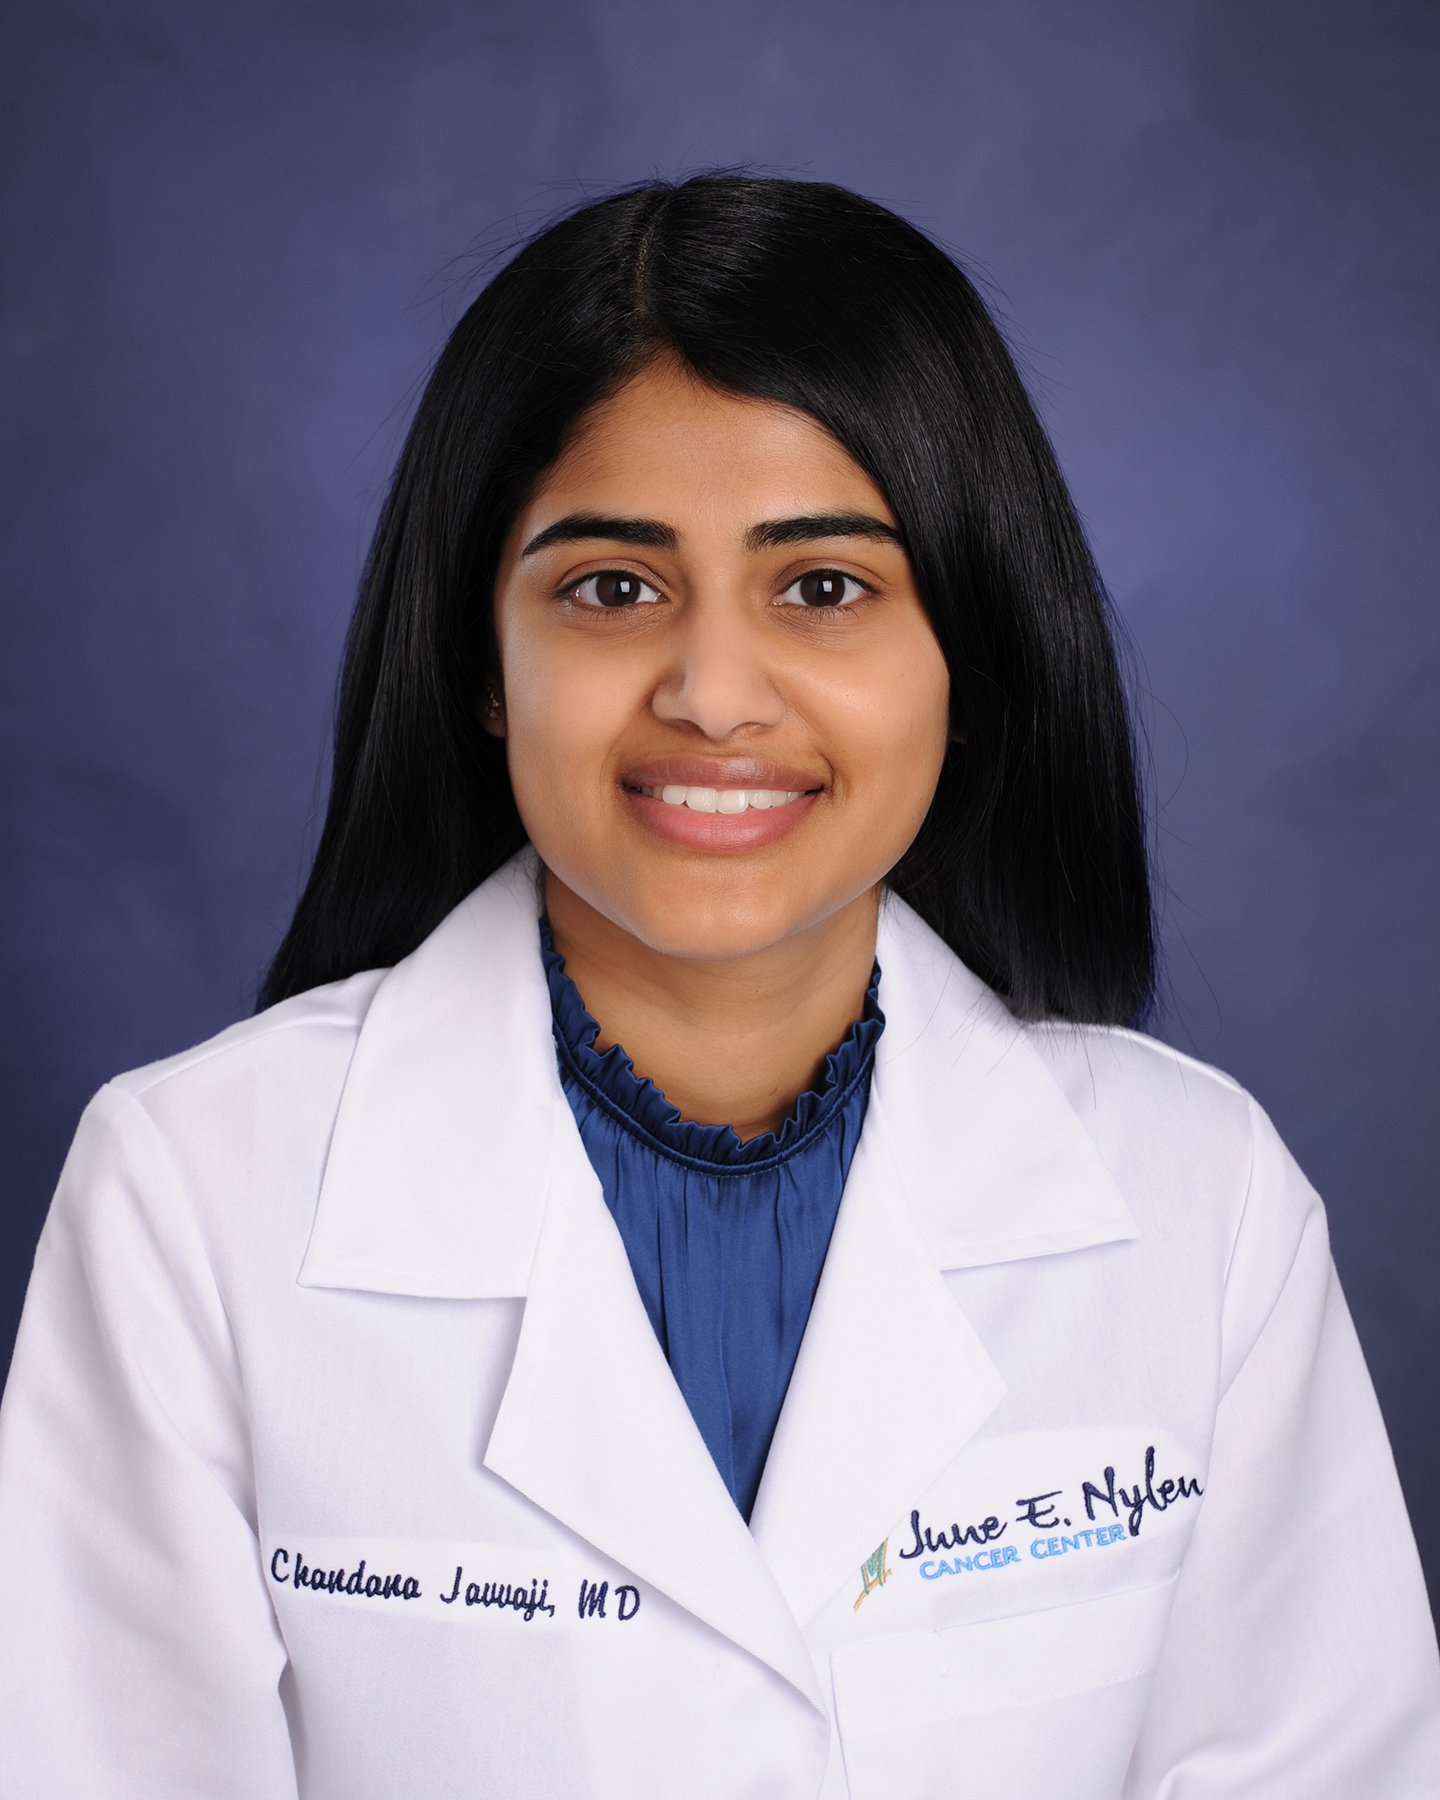 &lt;p&gt;&lt;strong&gt;Chandana Javvaji, MD&lt;/strong&gt;Medical Oncology &amp; Hematology&lt;a href=/javvaji&gt;Meet Dr. Javvaji →&lt;/a&gt;&lt;/p&gt;